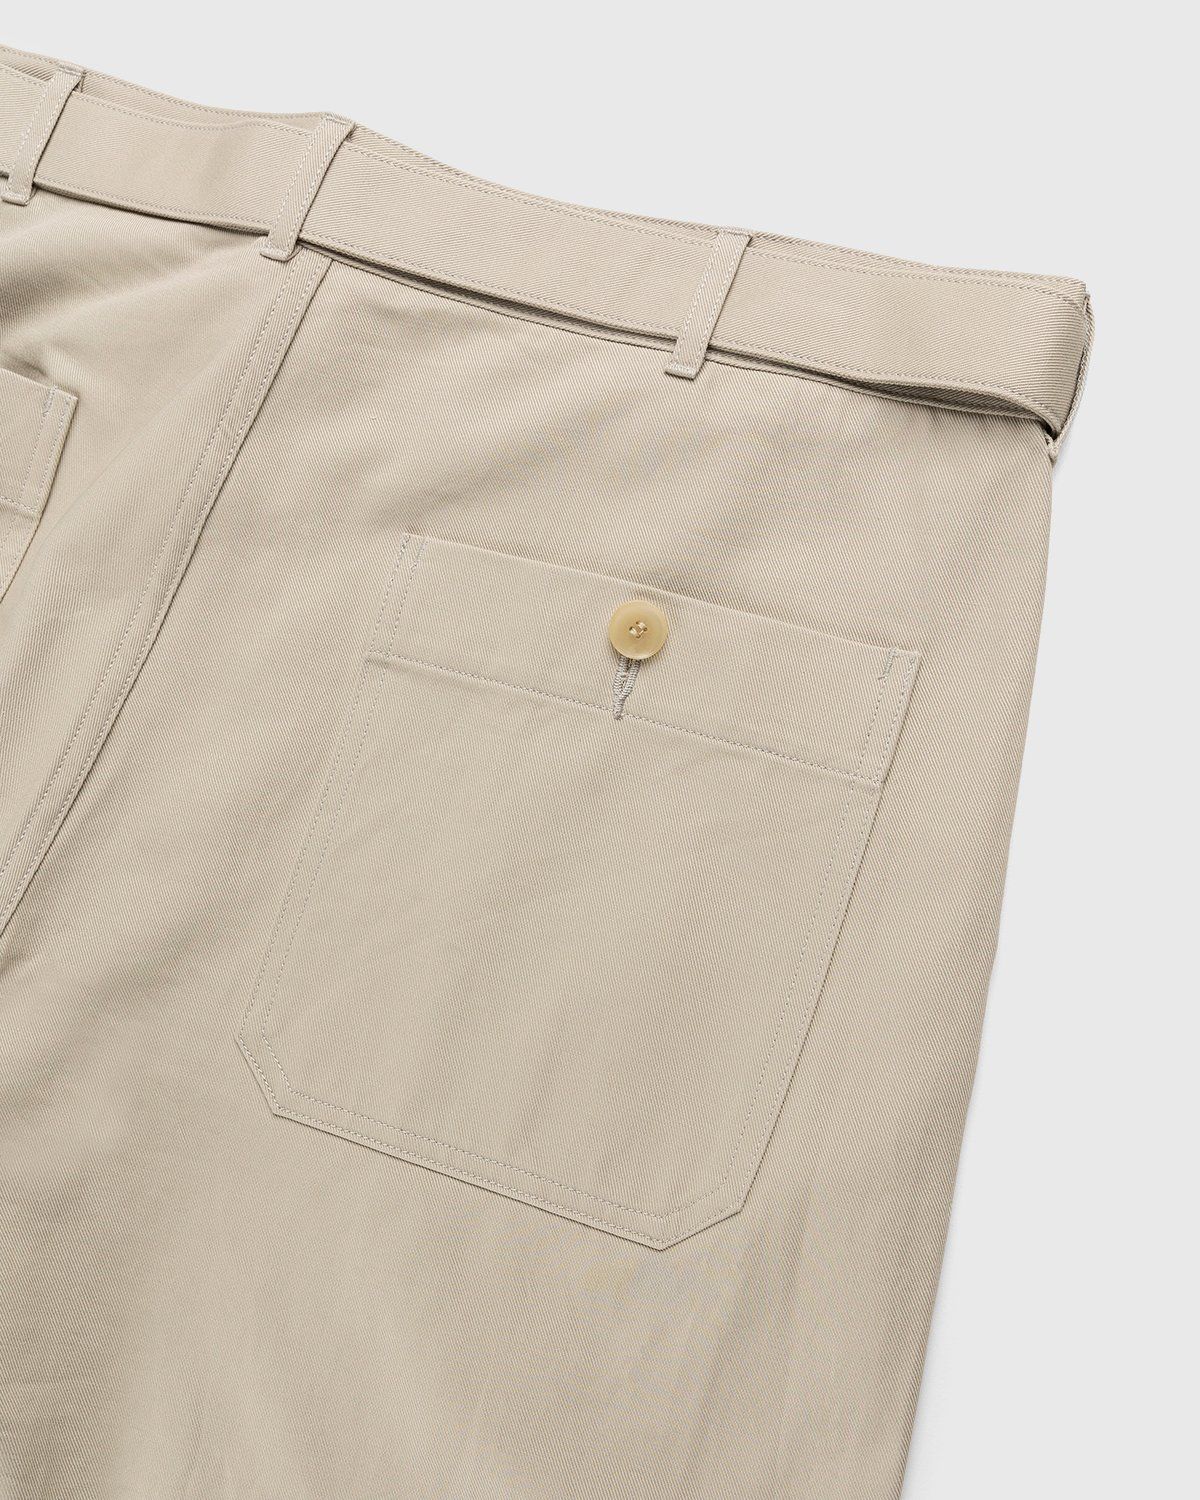 Auralee – Cotton Woven Pants Khaki - Trousers - Multi - Image 3